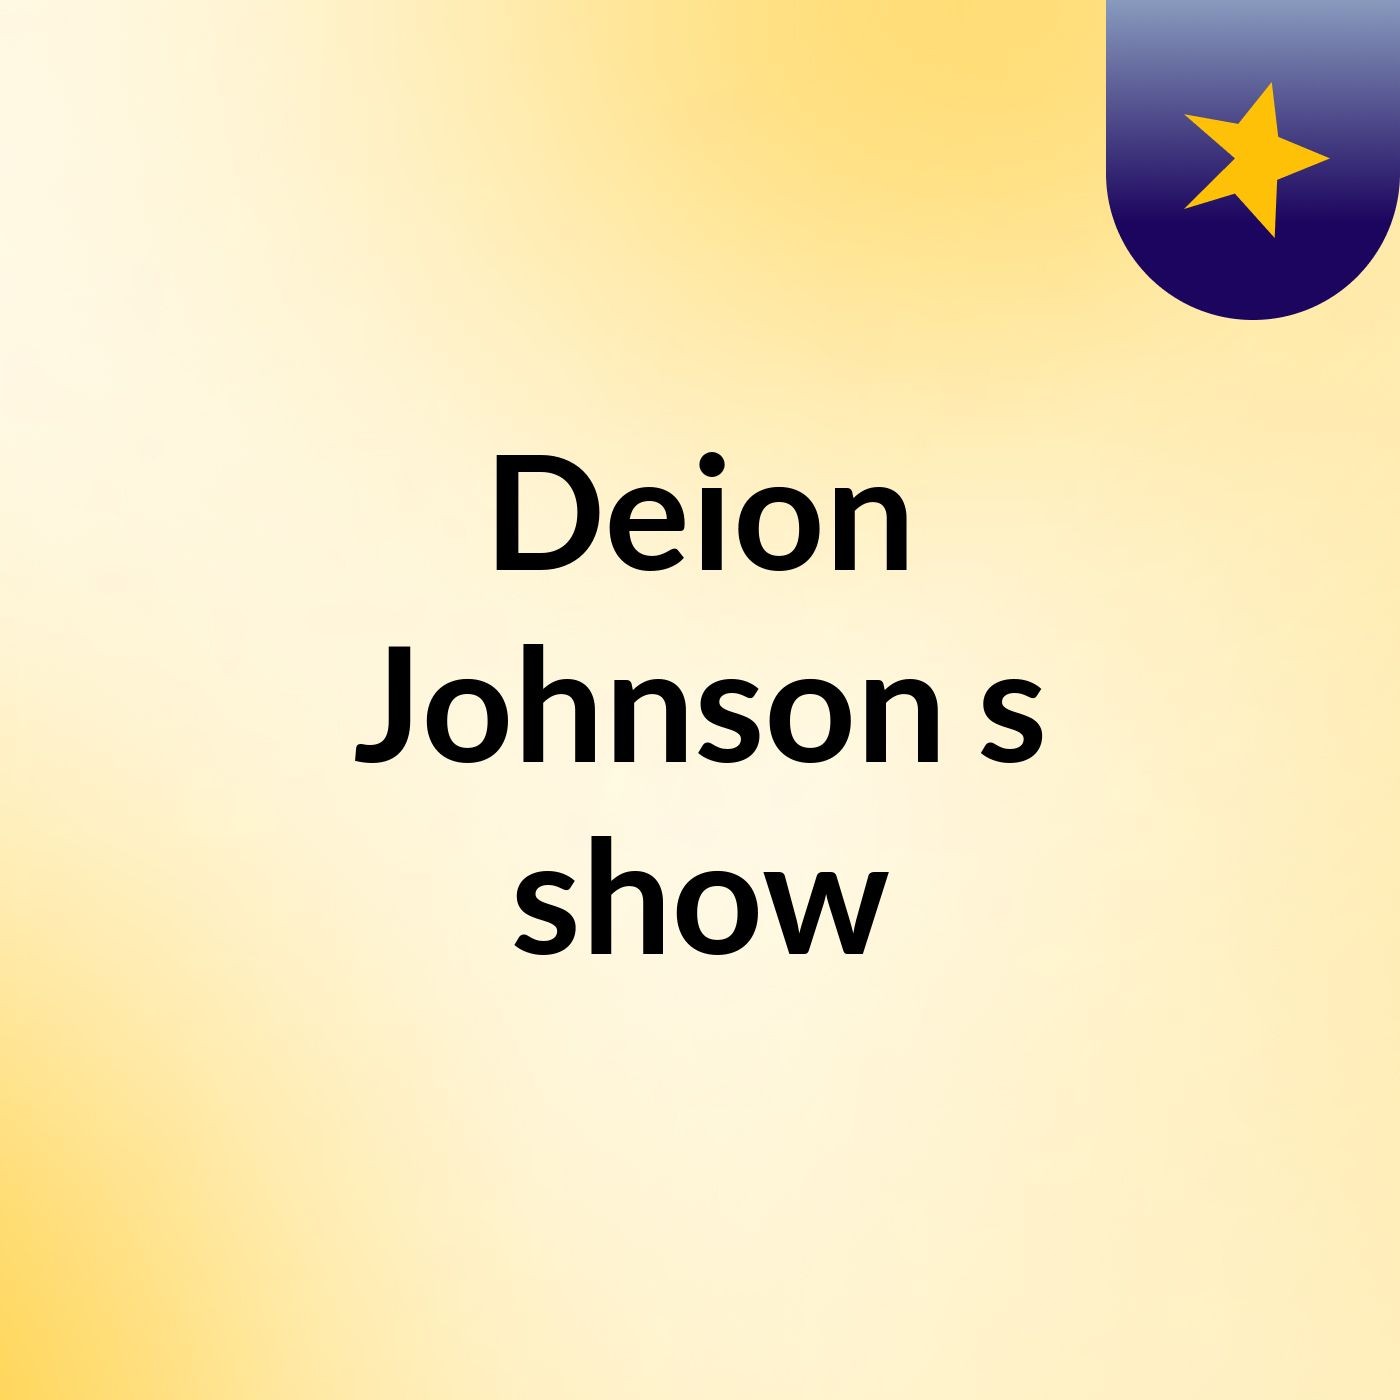 Episode 3 - Deion Johnson's show